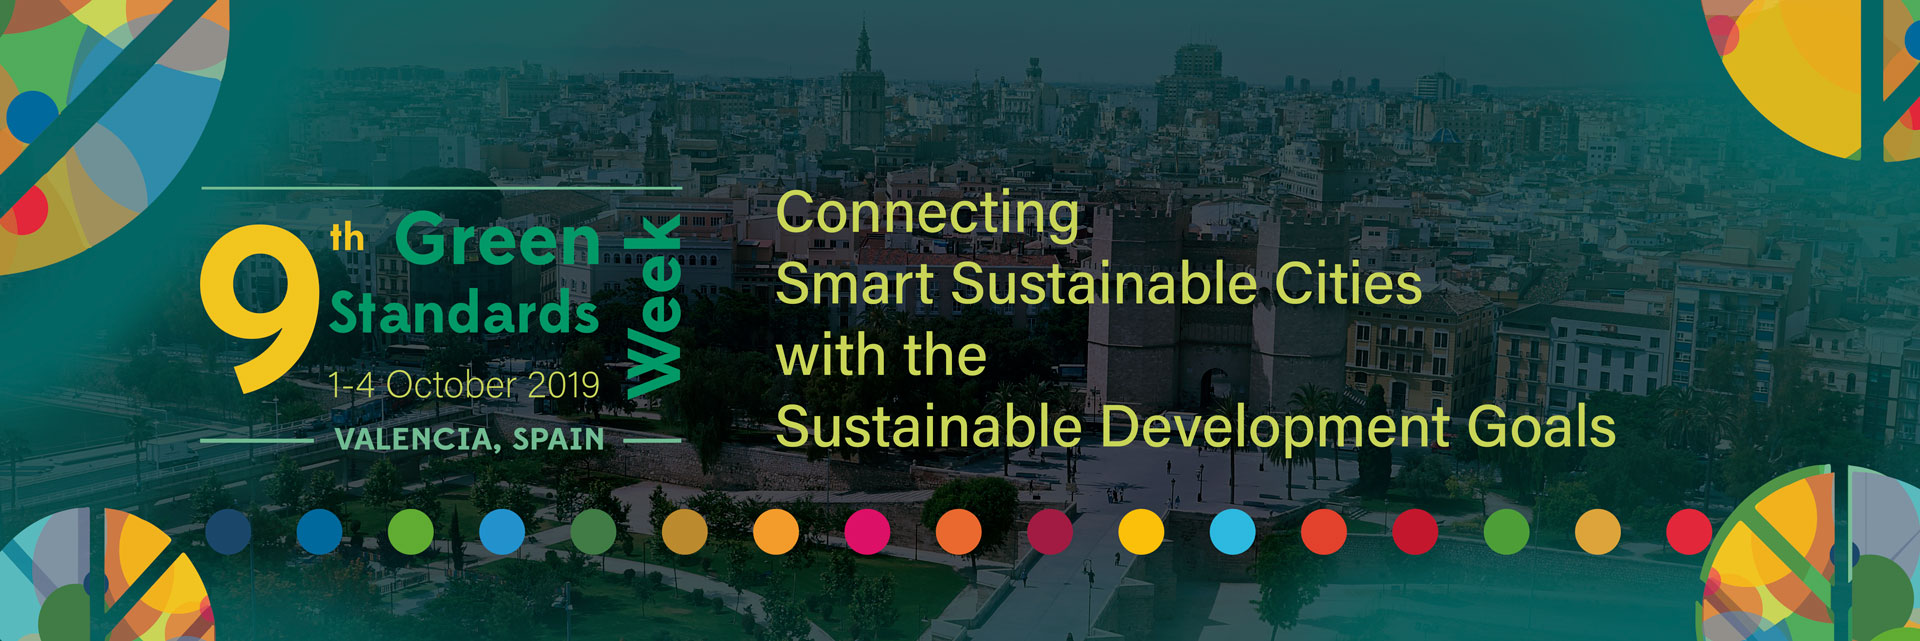 9th Green Standards Week ITU - Valencia 1-4 October 2019